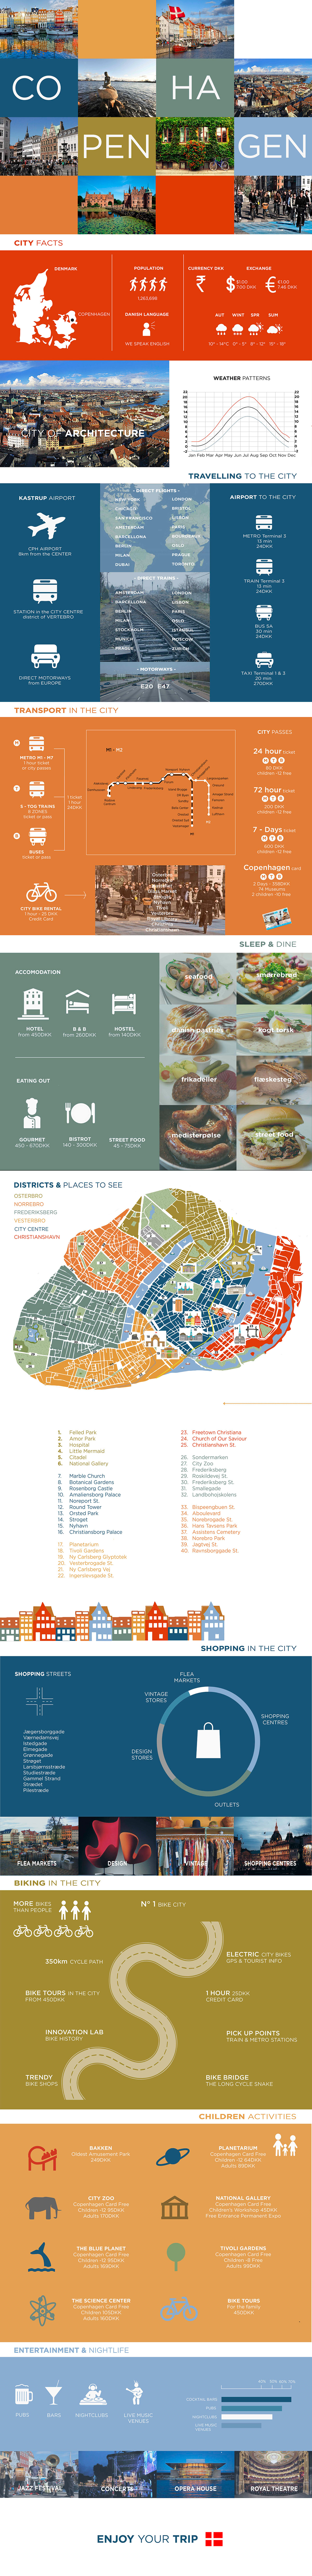 infografica guida città copenhagen onepagesite City Guide Web Guide  Travel infographics